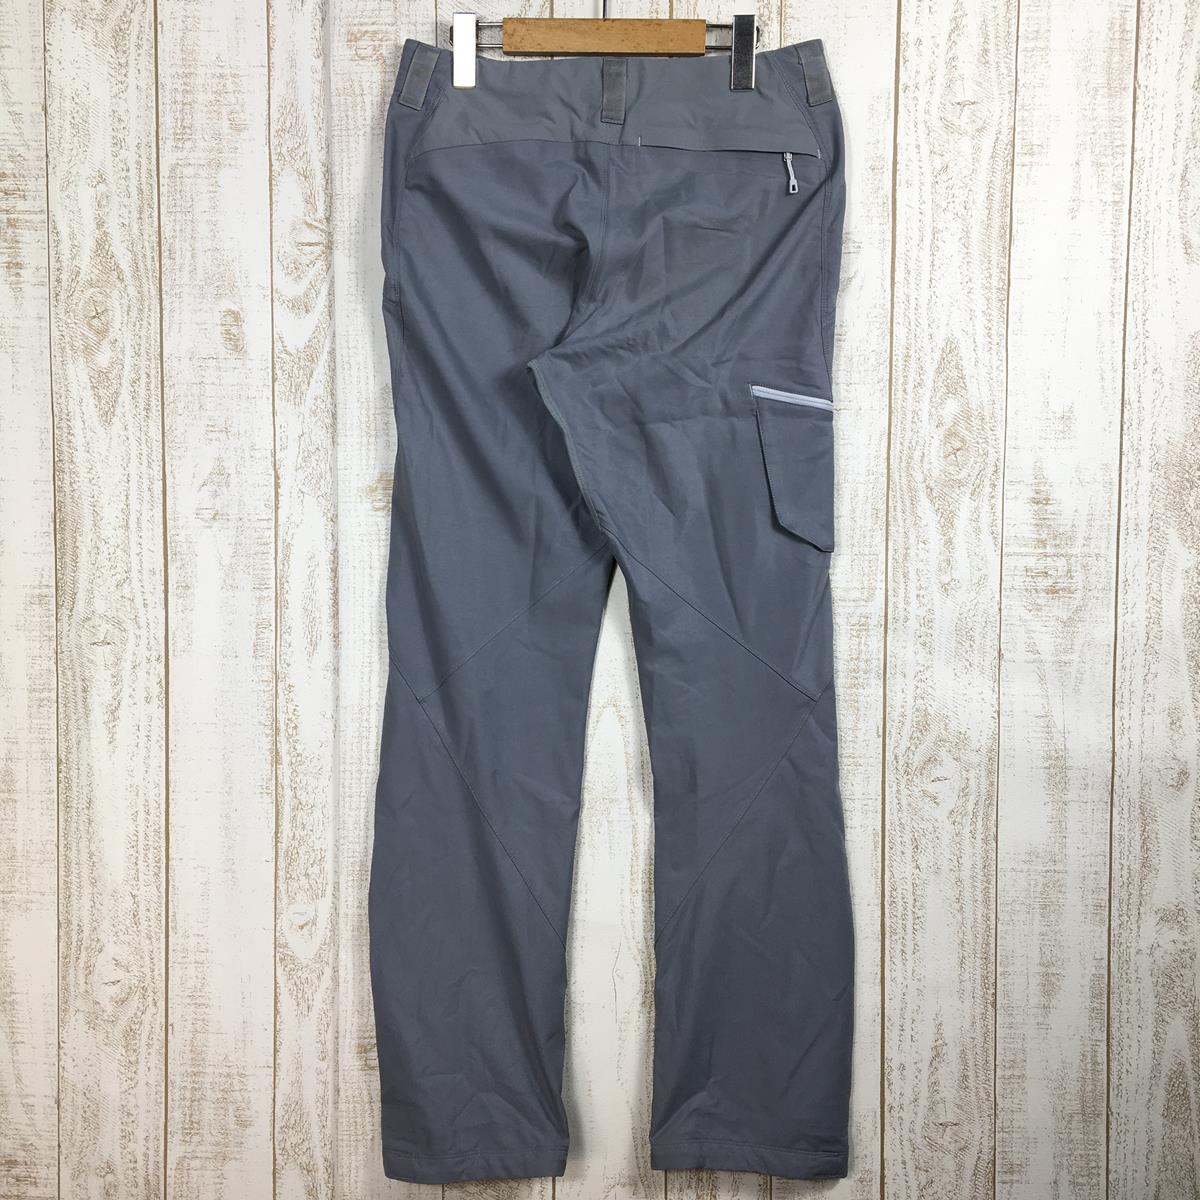 【WOMEN's 2】 パタゴニア サイマル アルパイン パンツ Simul Alpine Pants ソフトシェル PATAGONIA 83065 FEA Feather Grey グレー系